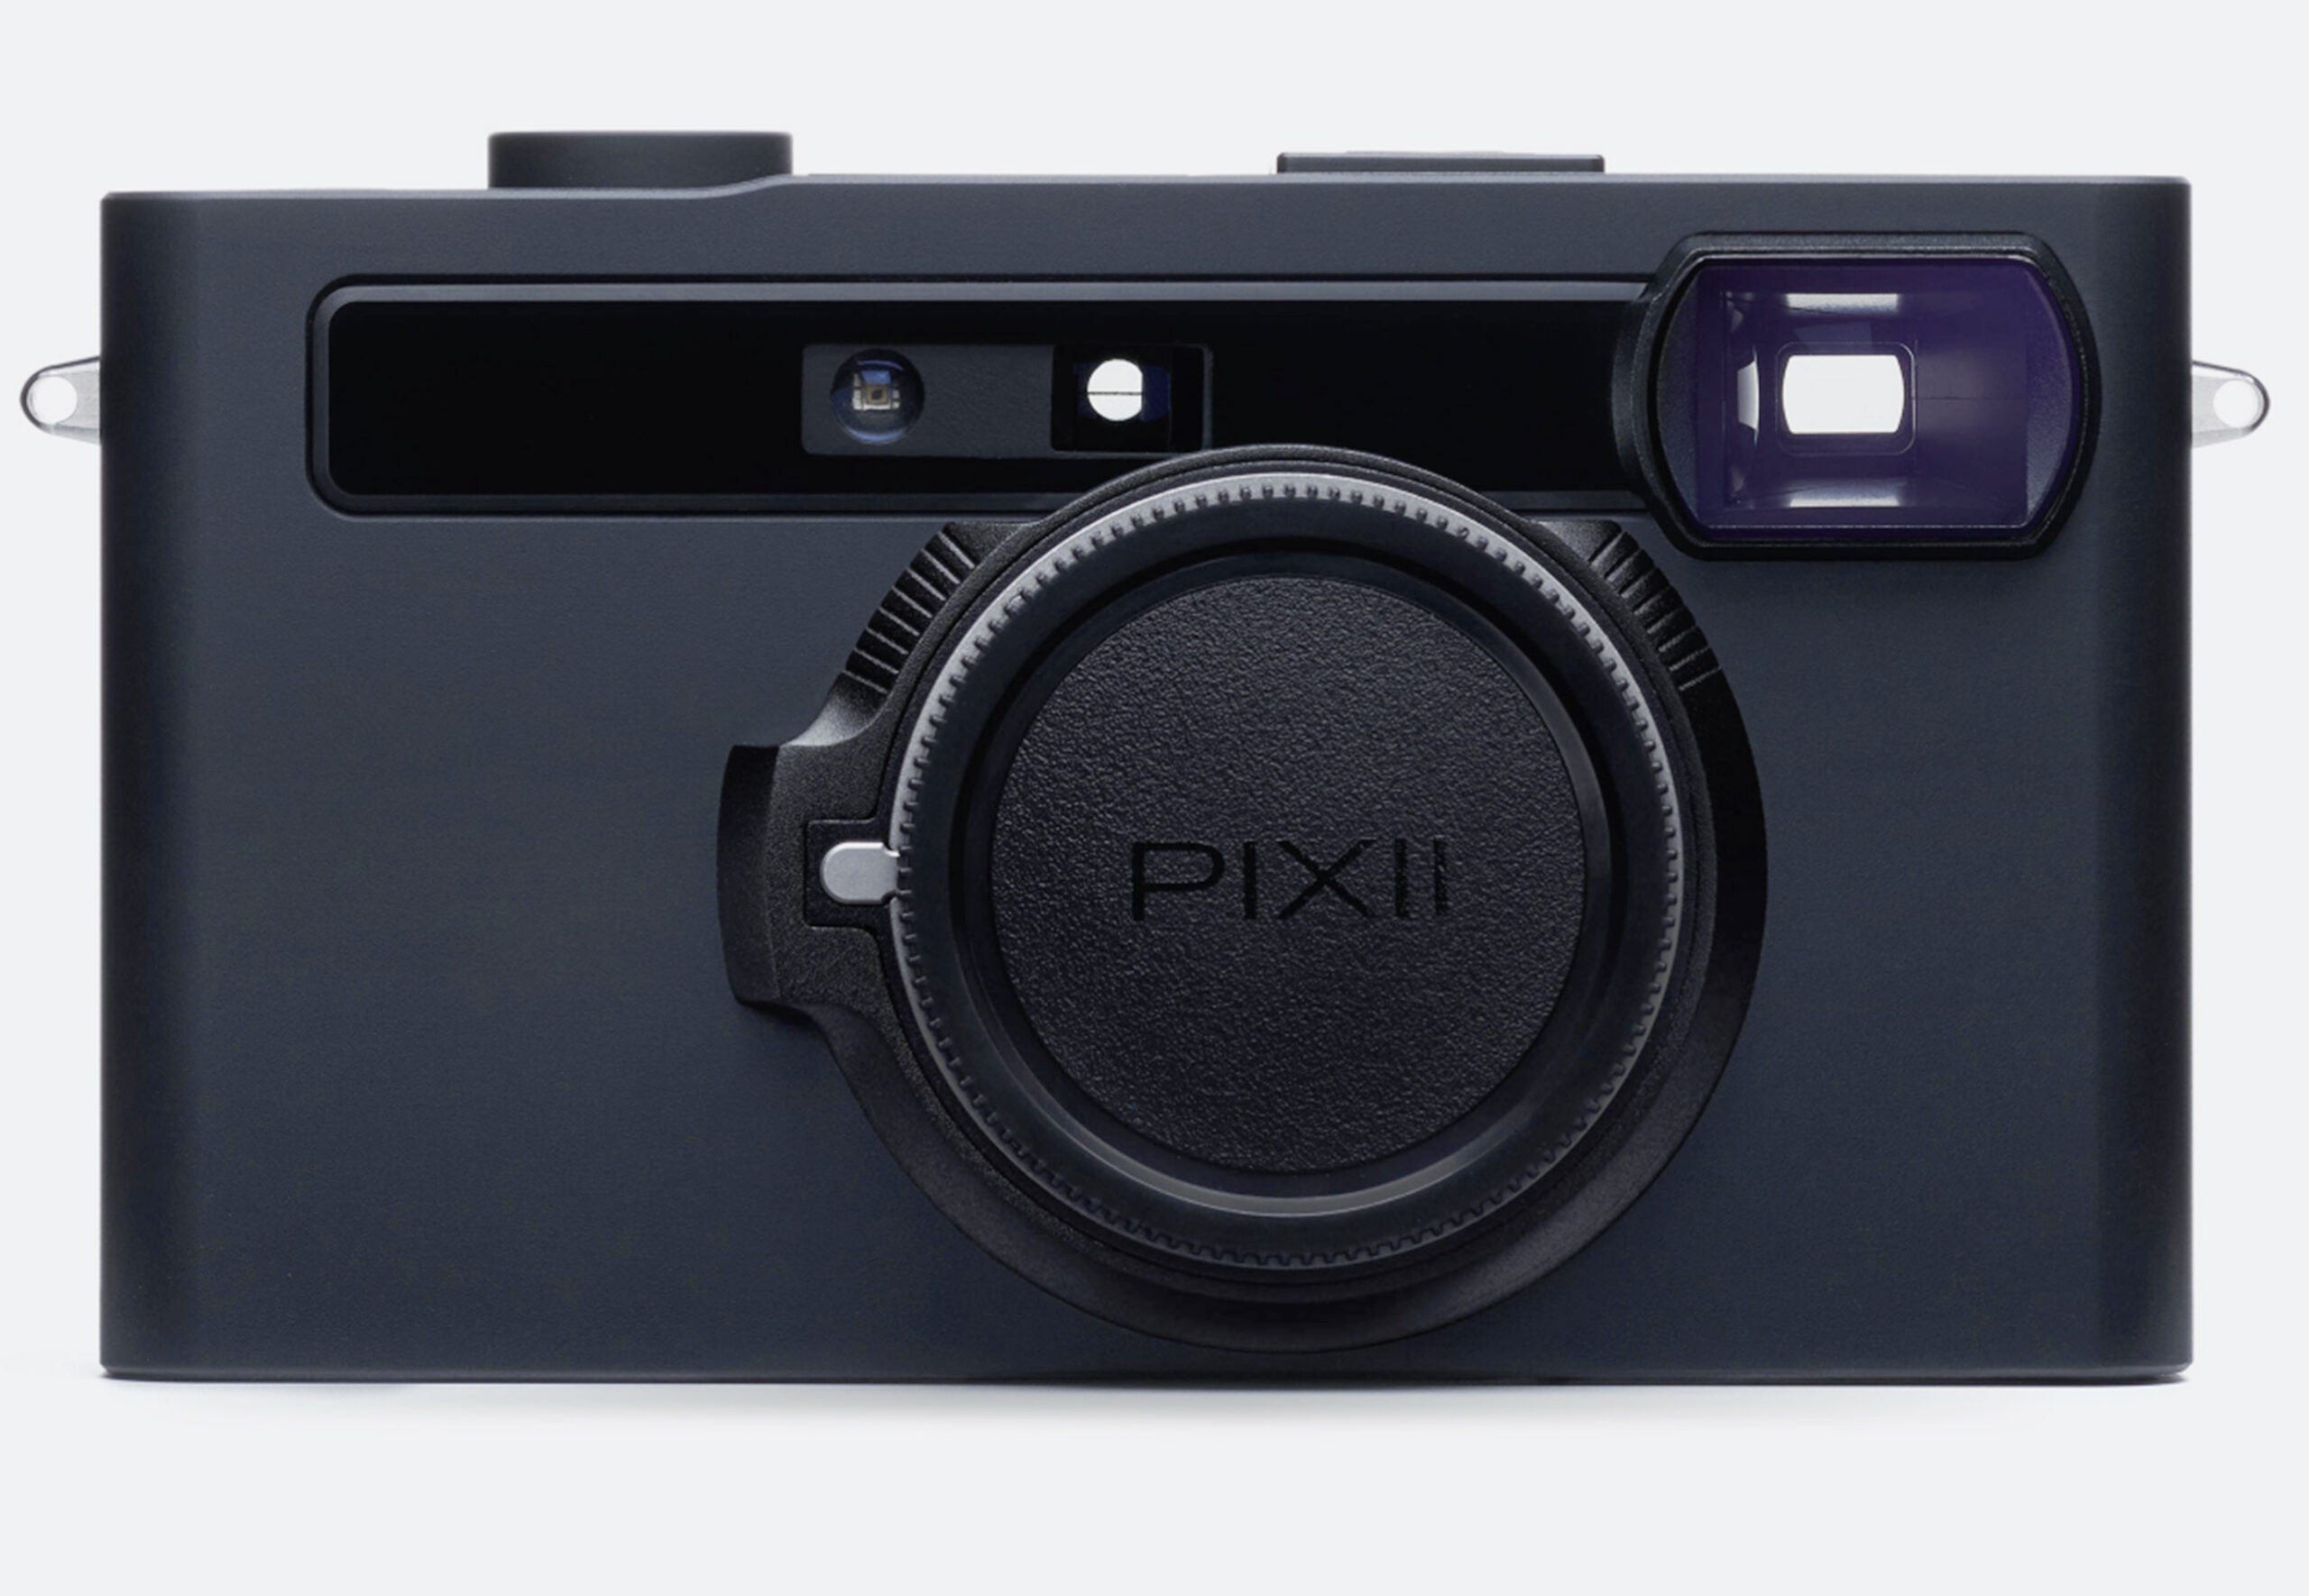 The new Pixii camera